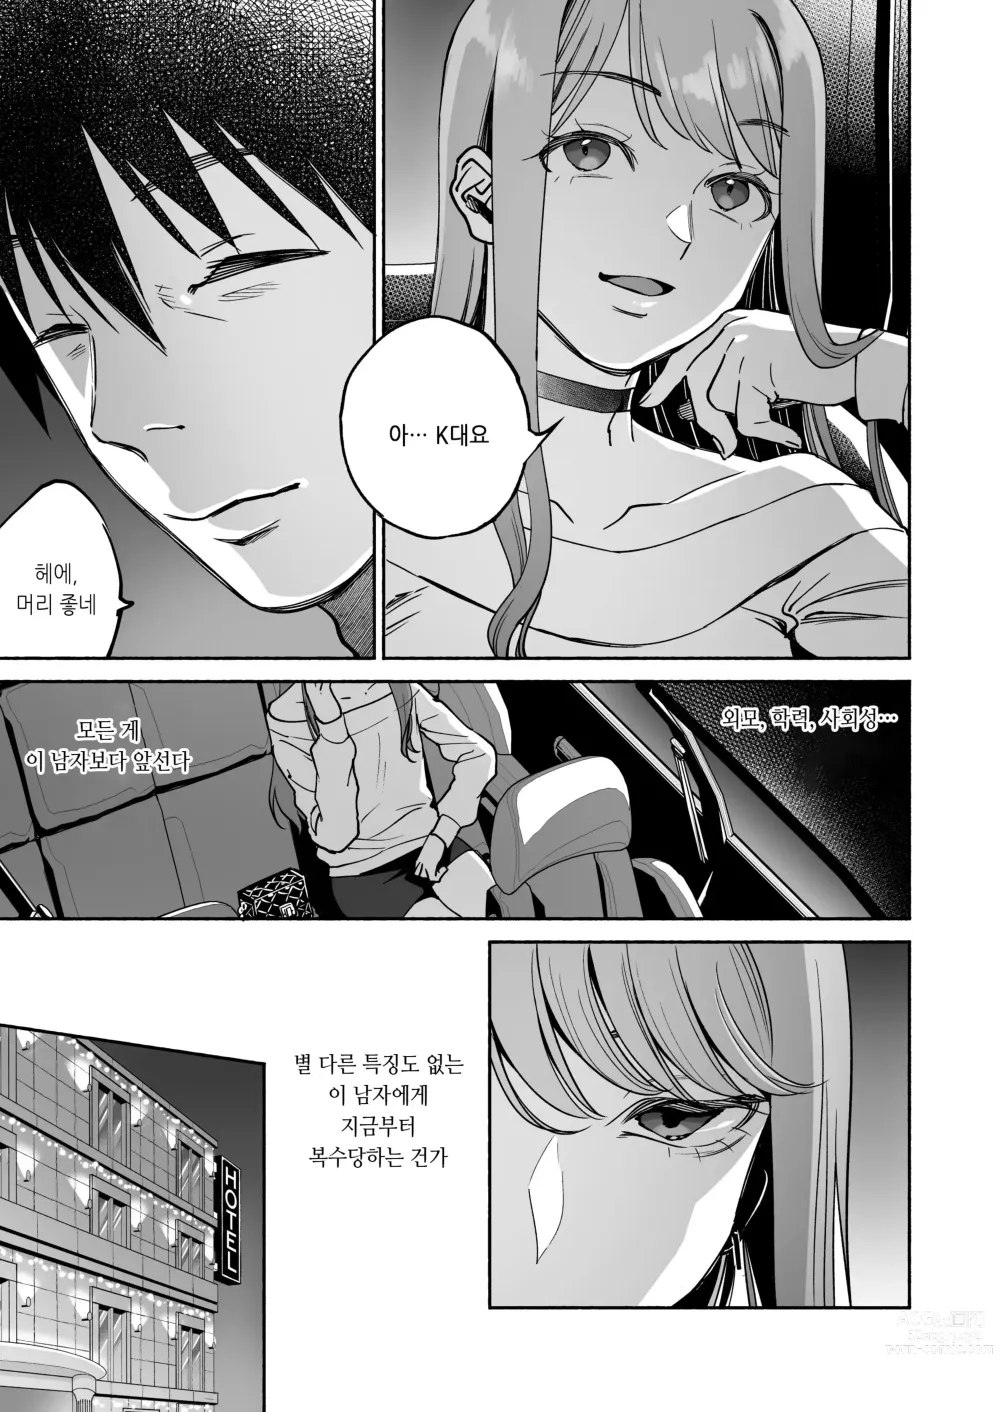 Page 10 of doujinshi 학력, 외모 무엇이든 뒤떨어지는 아저씨 전용 오나홀이 되었습니다.